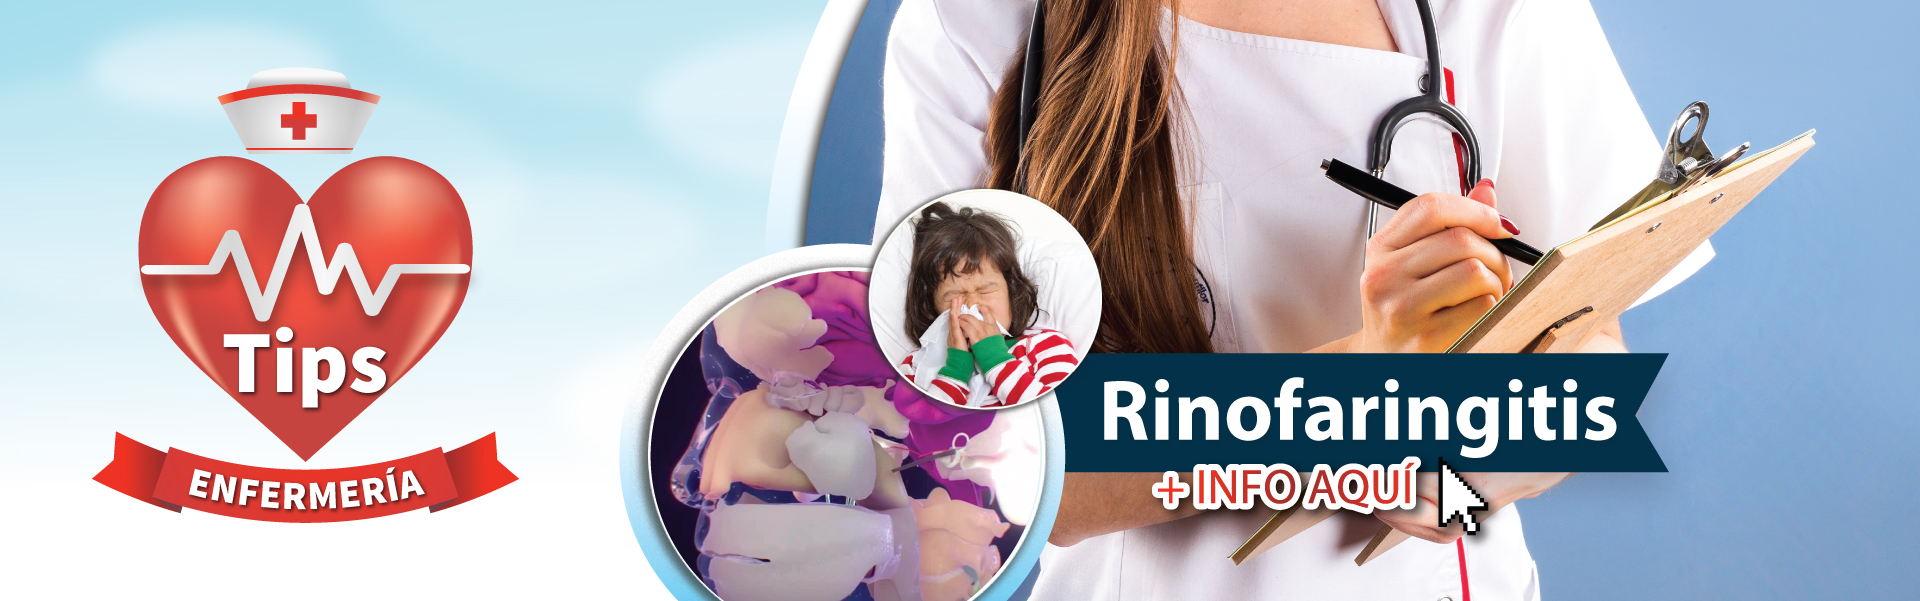 rinofatingitis